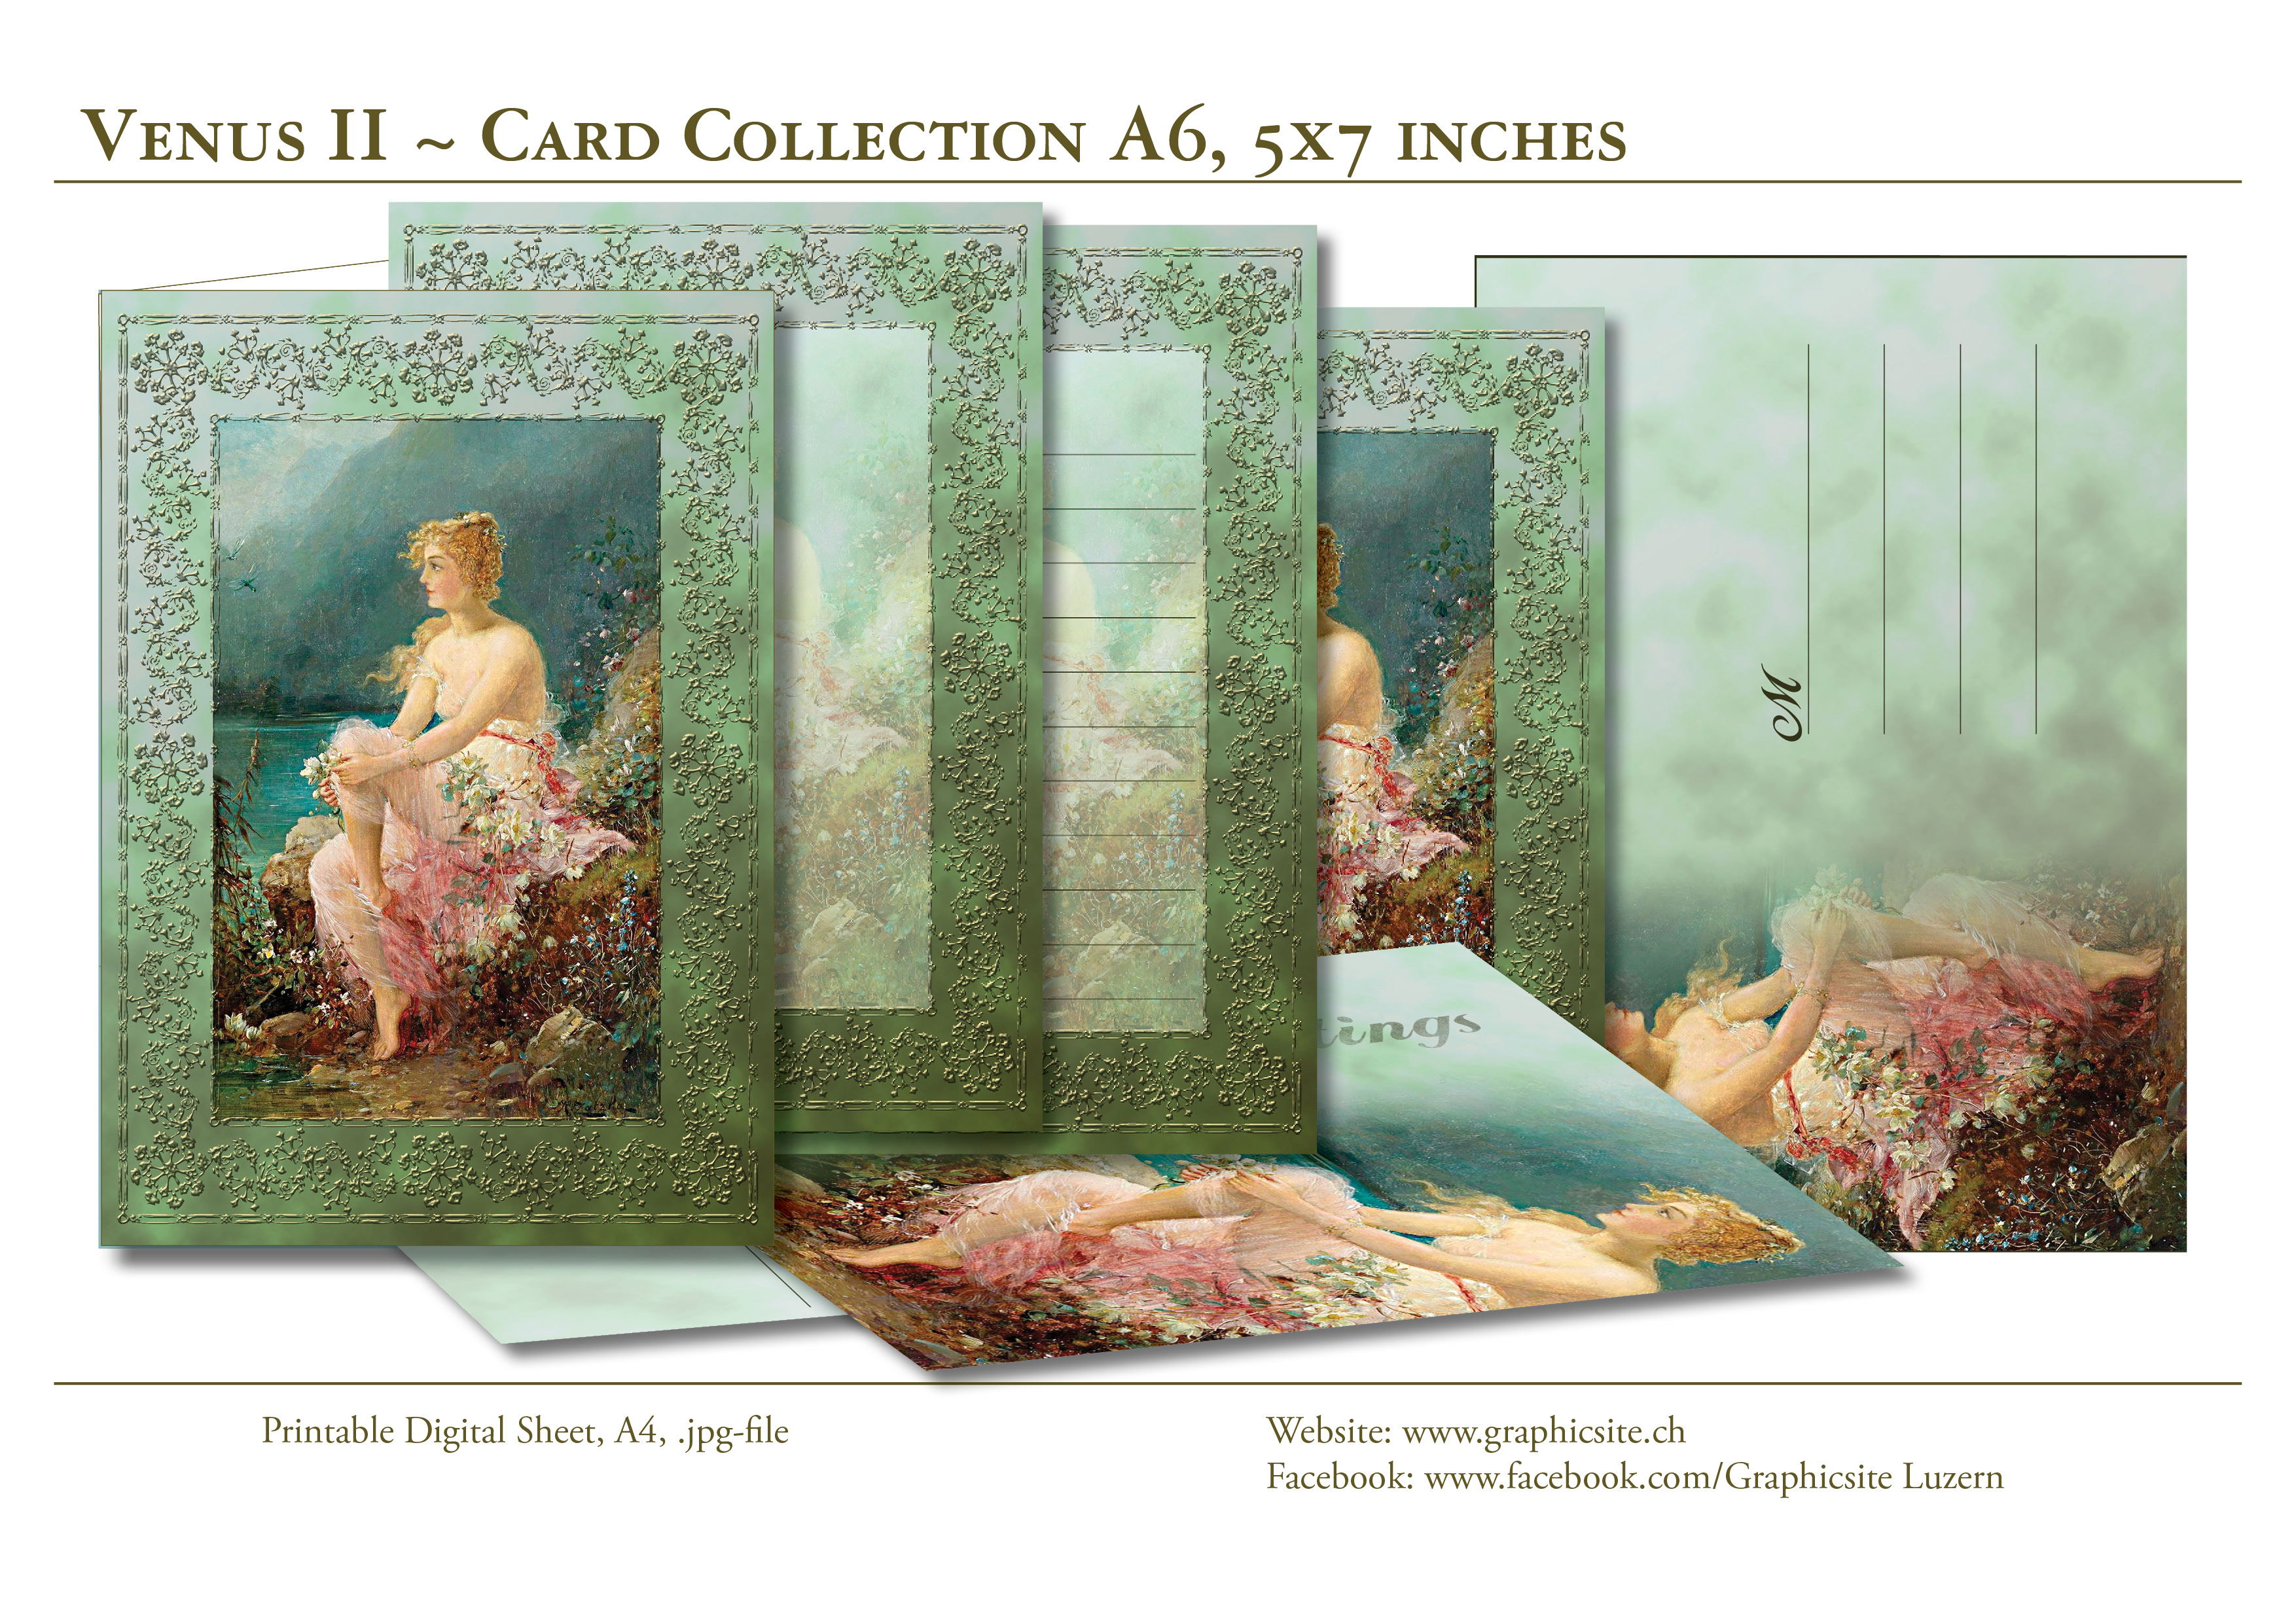 Printable Digital Sheets - CardCollection A6- Venus II - Romantic, vintage, postcards, greetingcards,  